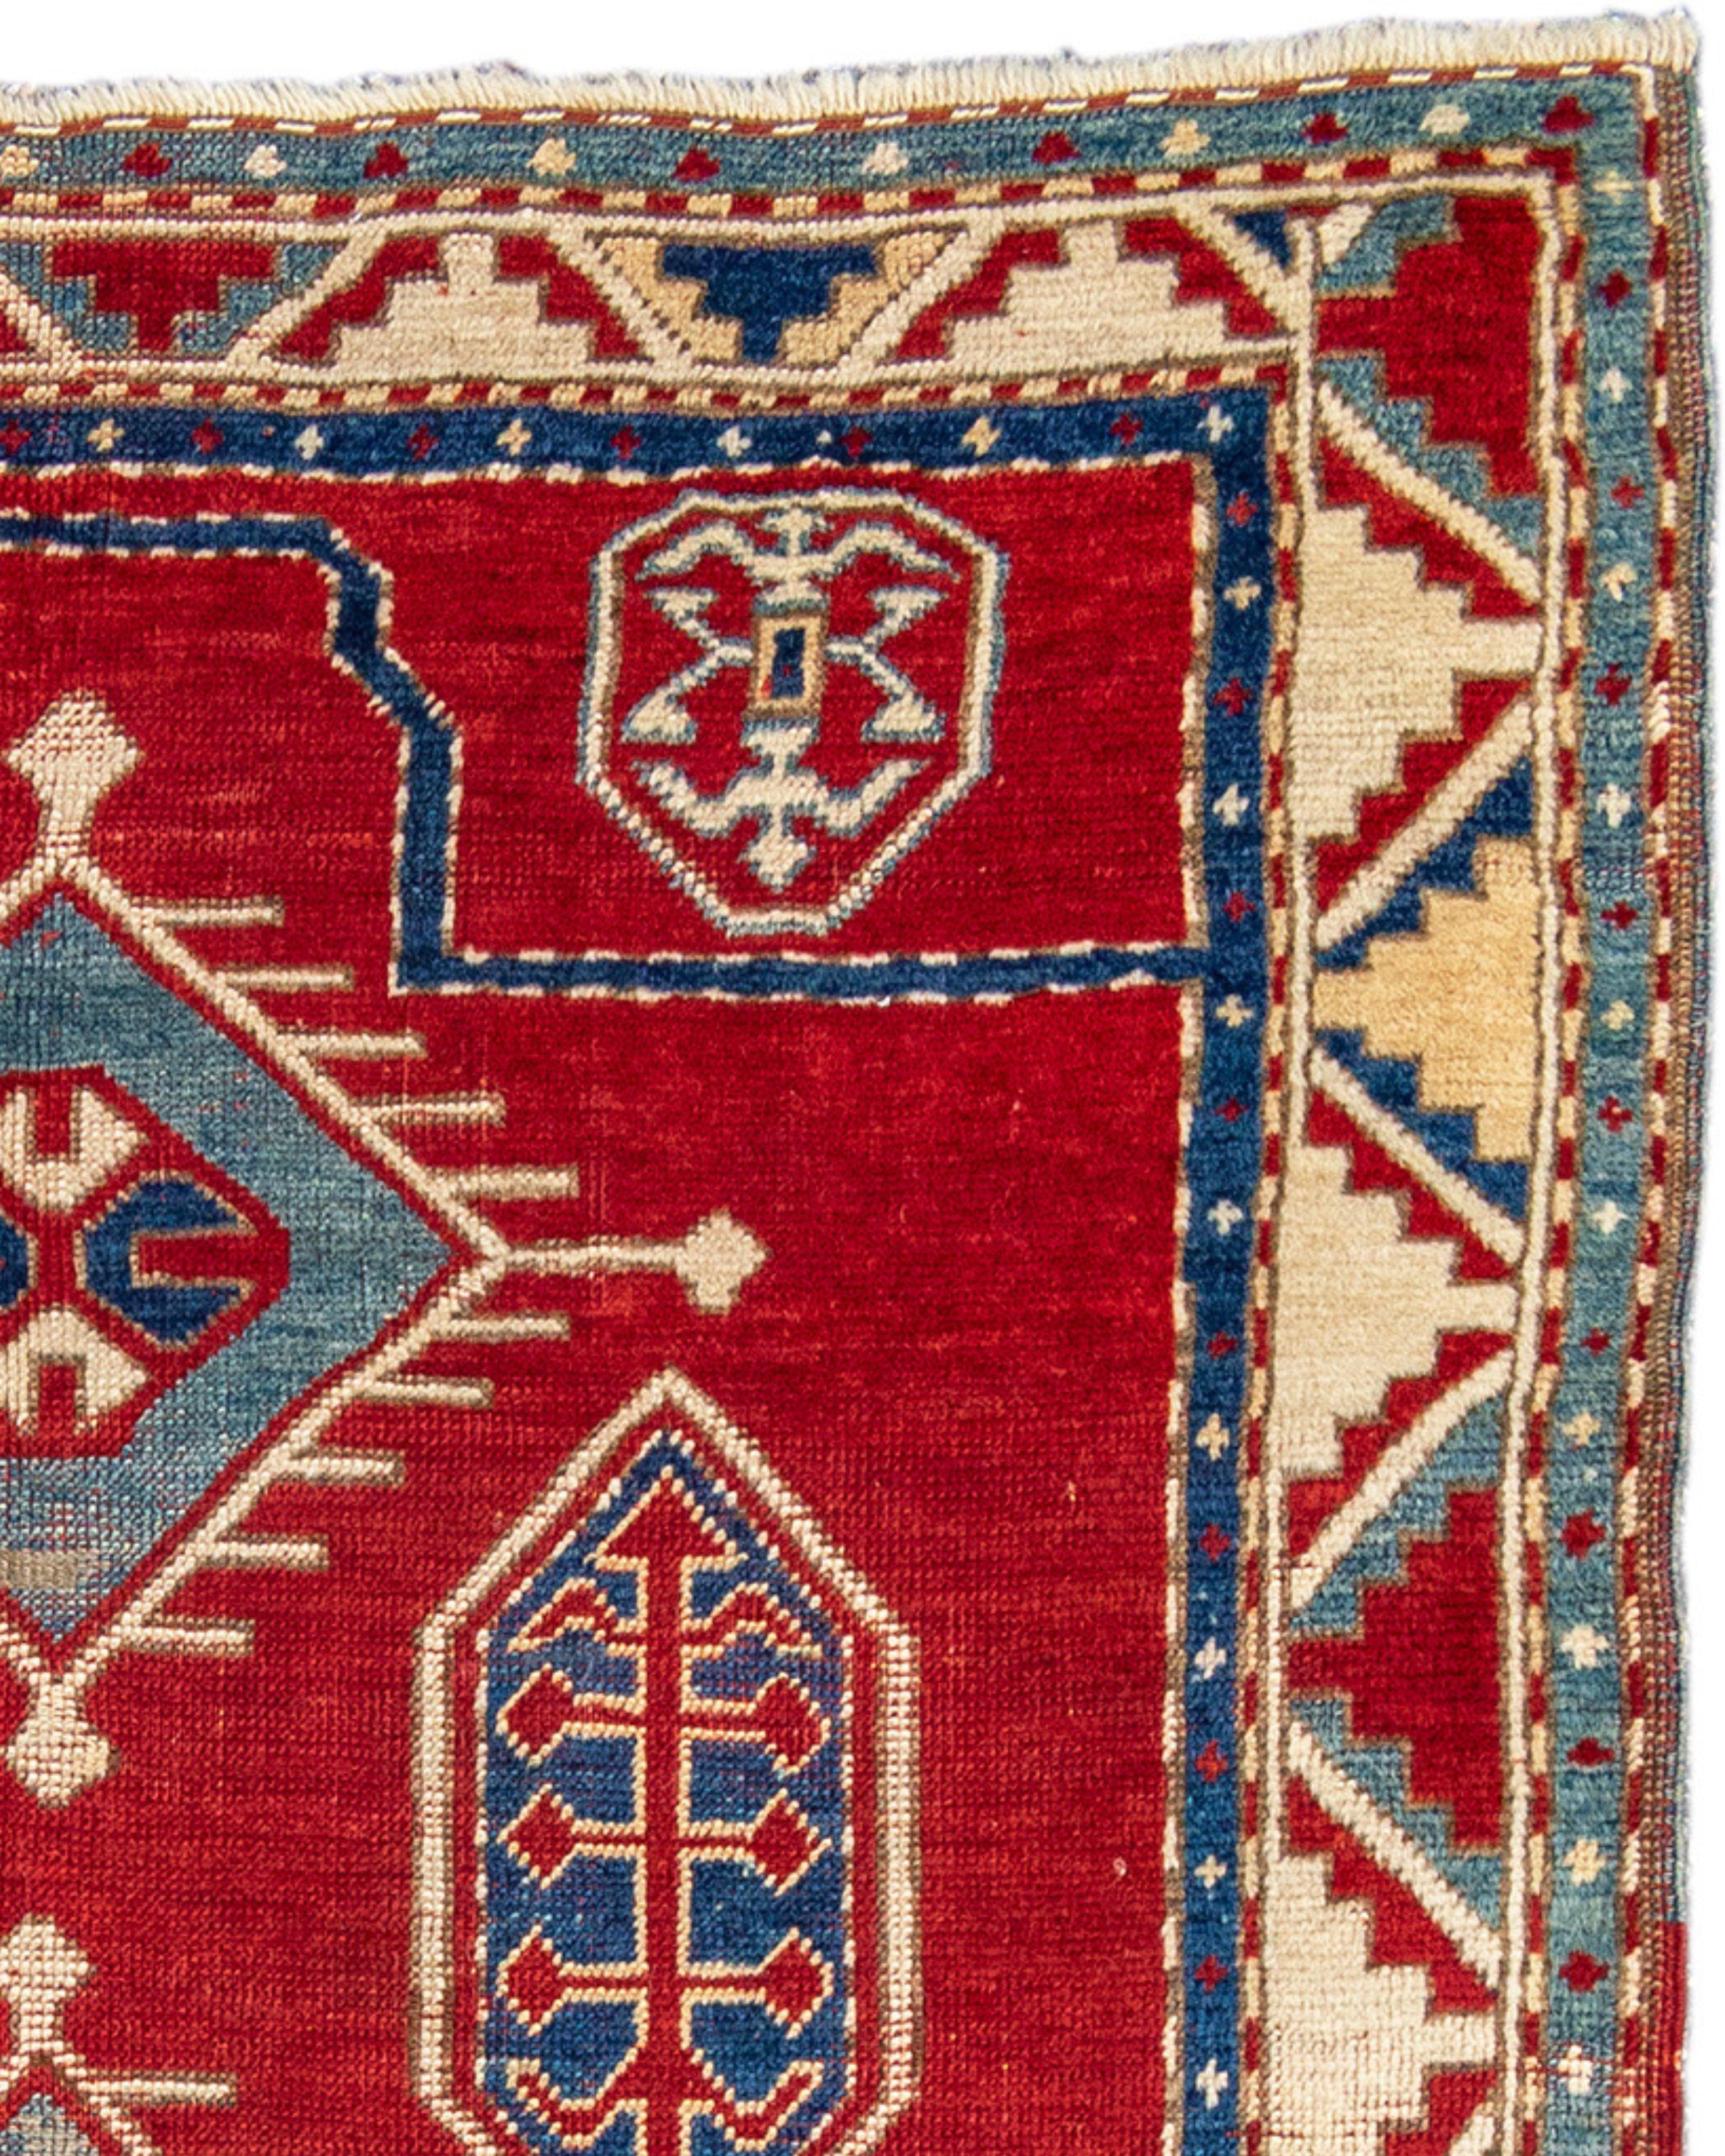 Antique Kazak prayer Rug, 19th Century

Additional Information:
Dimensions: 3'9